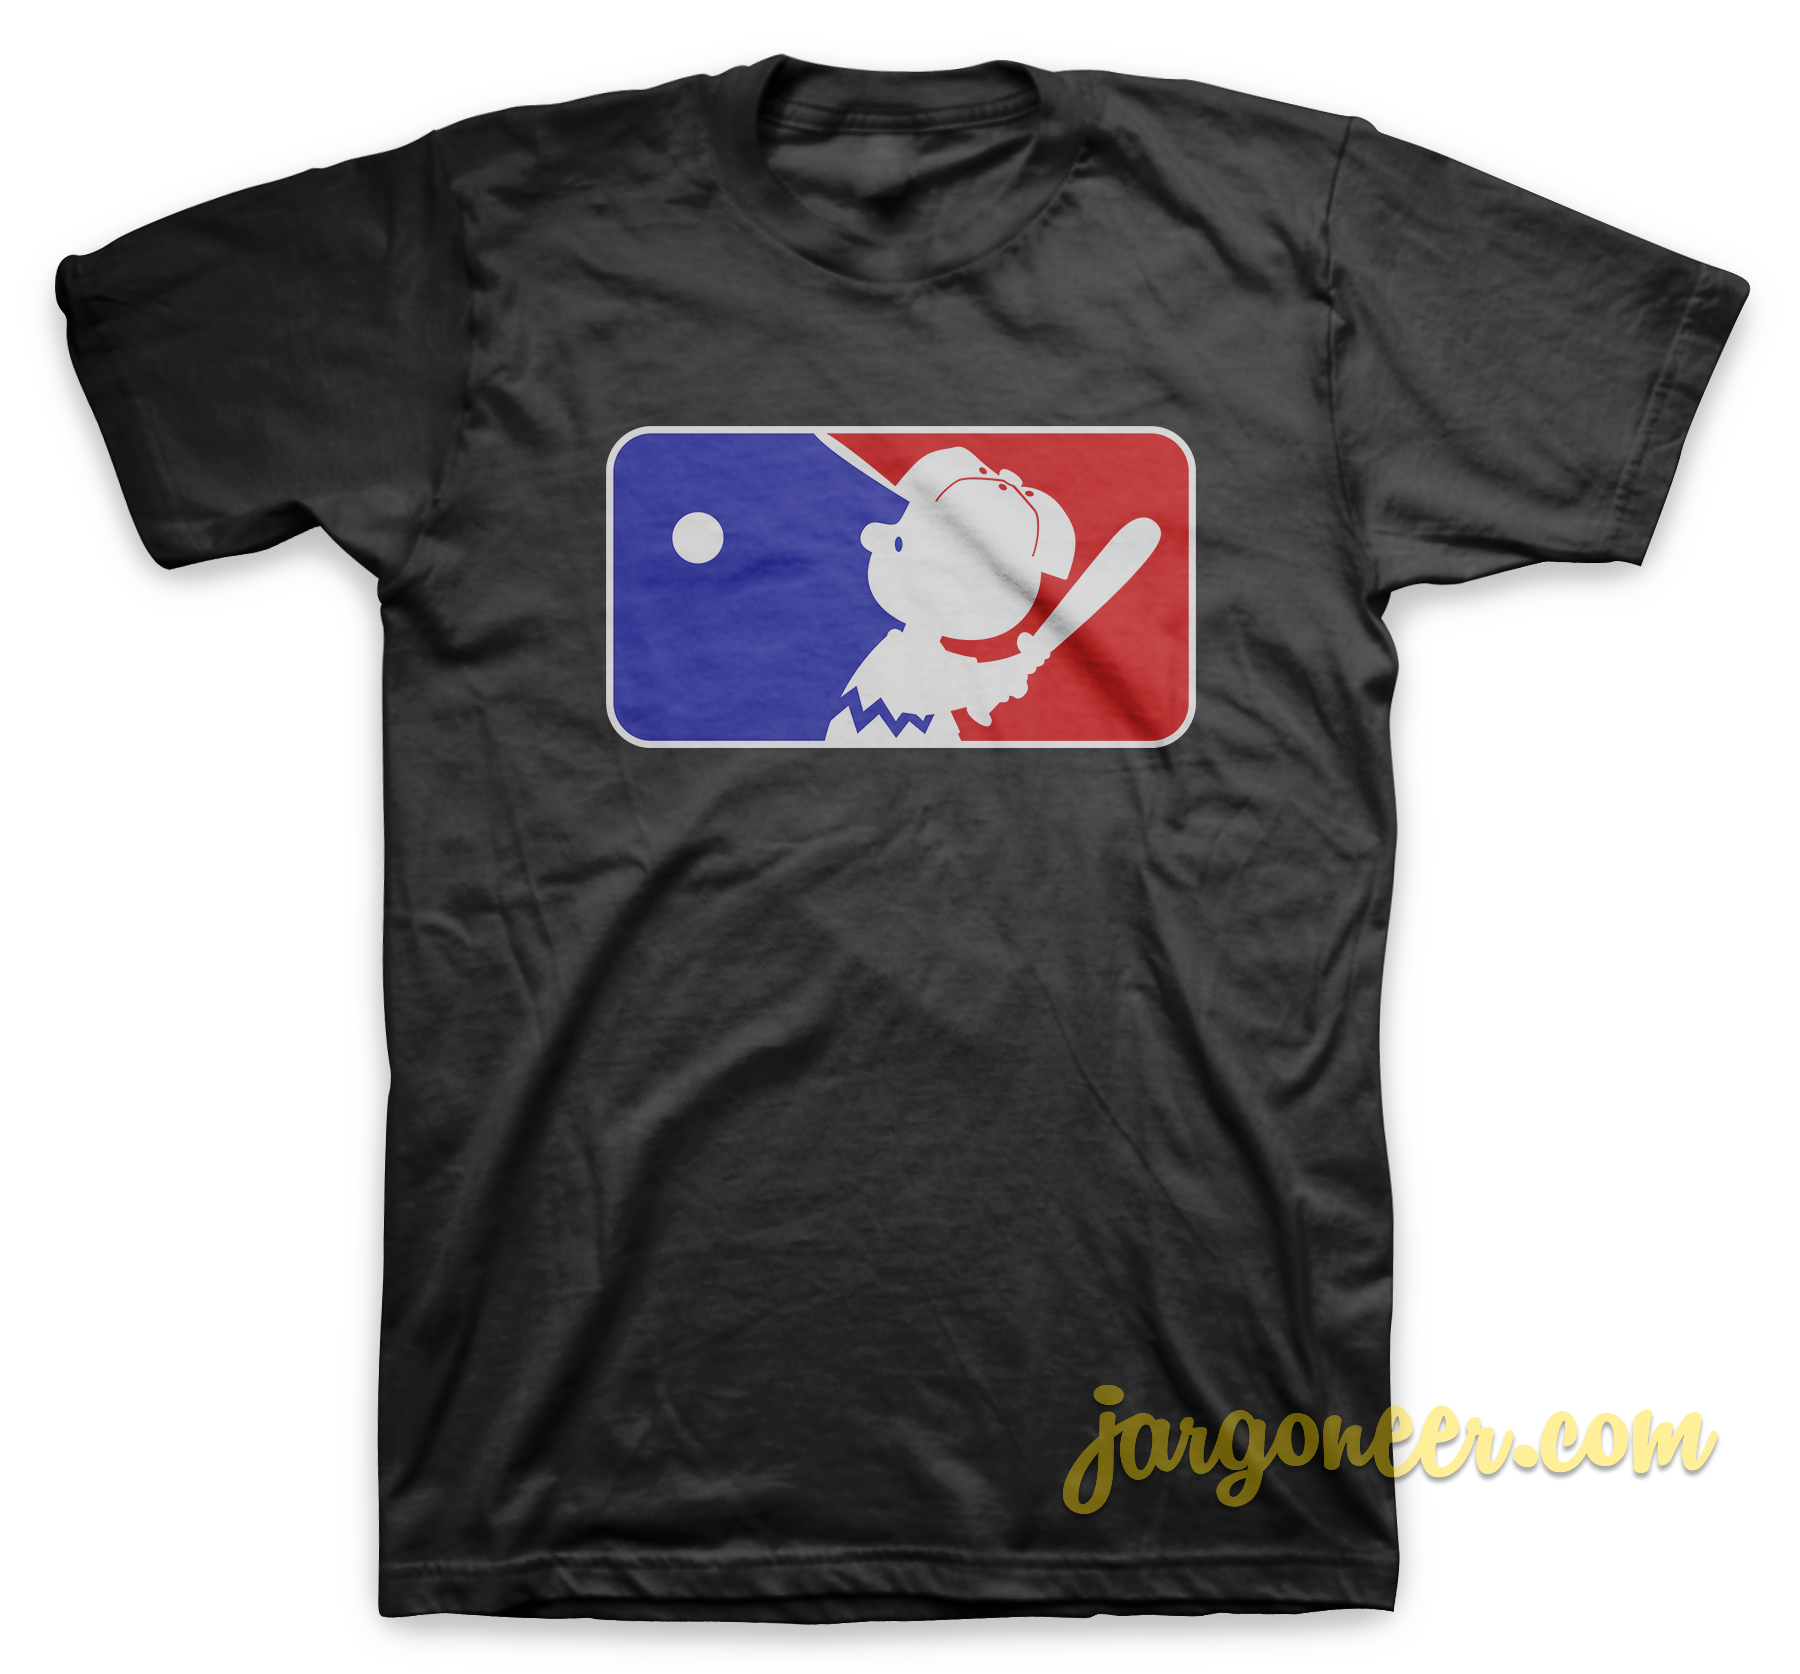 Baseball Charlie Black T Shirt - Shop Unique Graphic Cool Shirt Designs